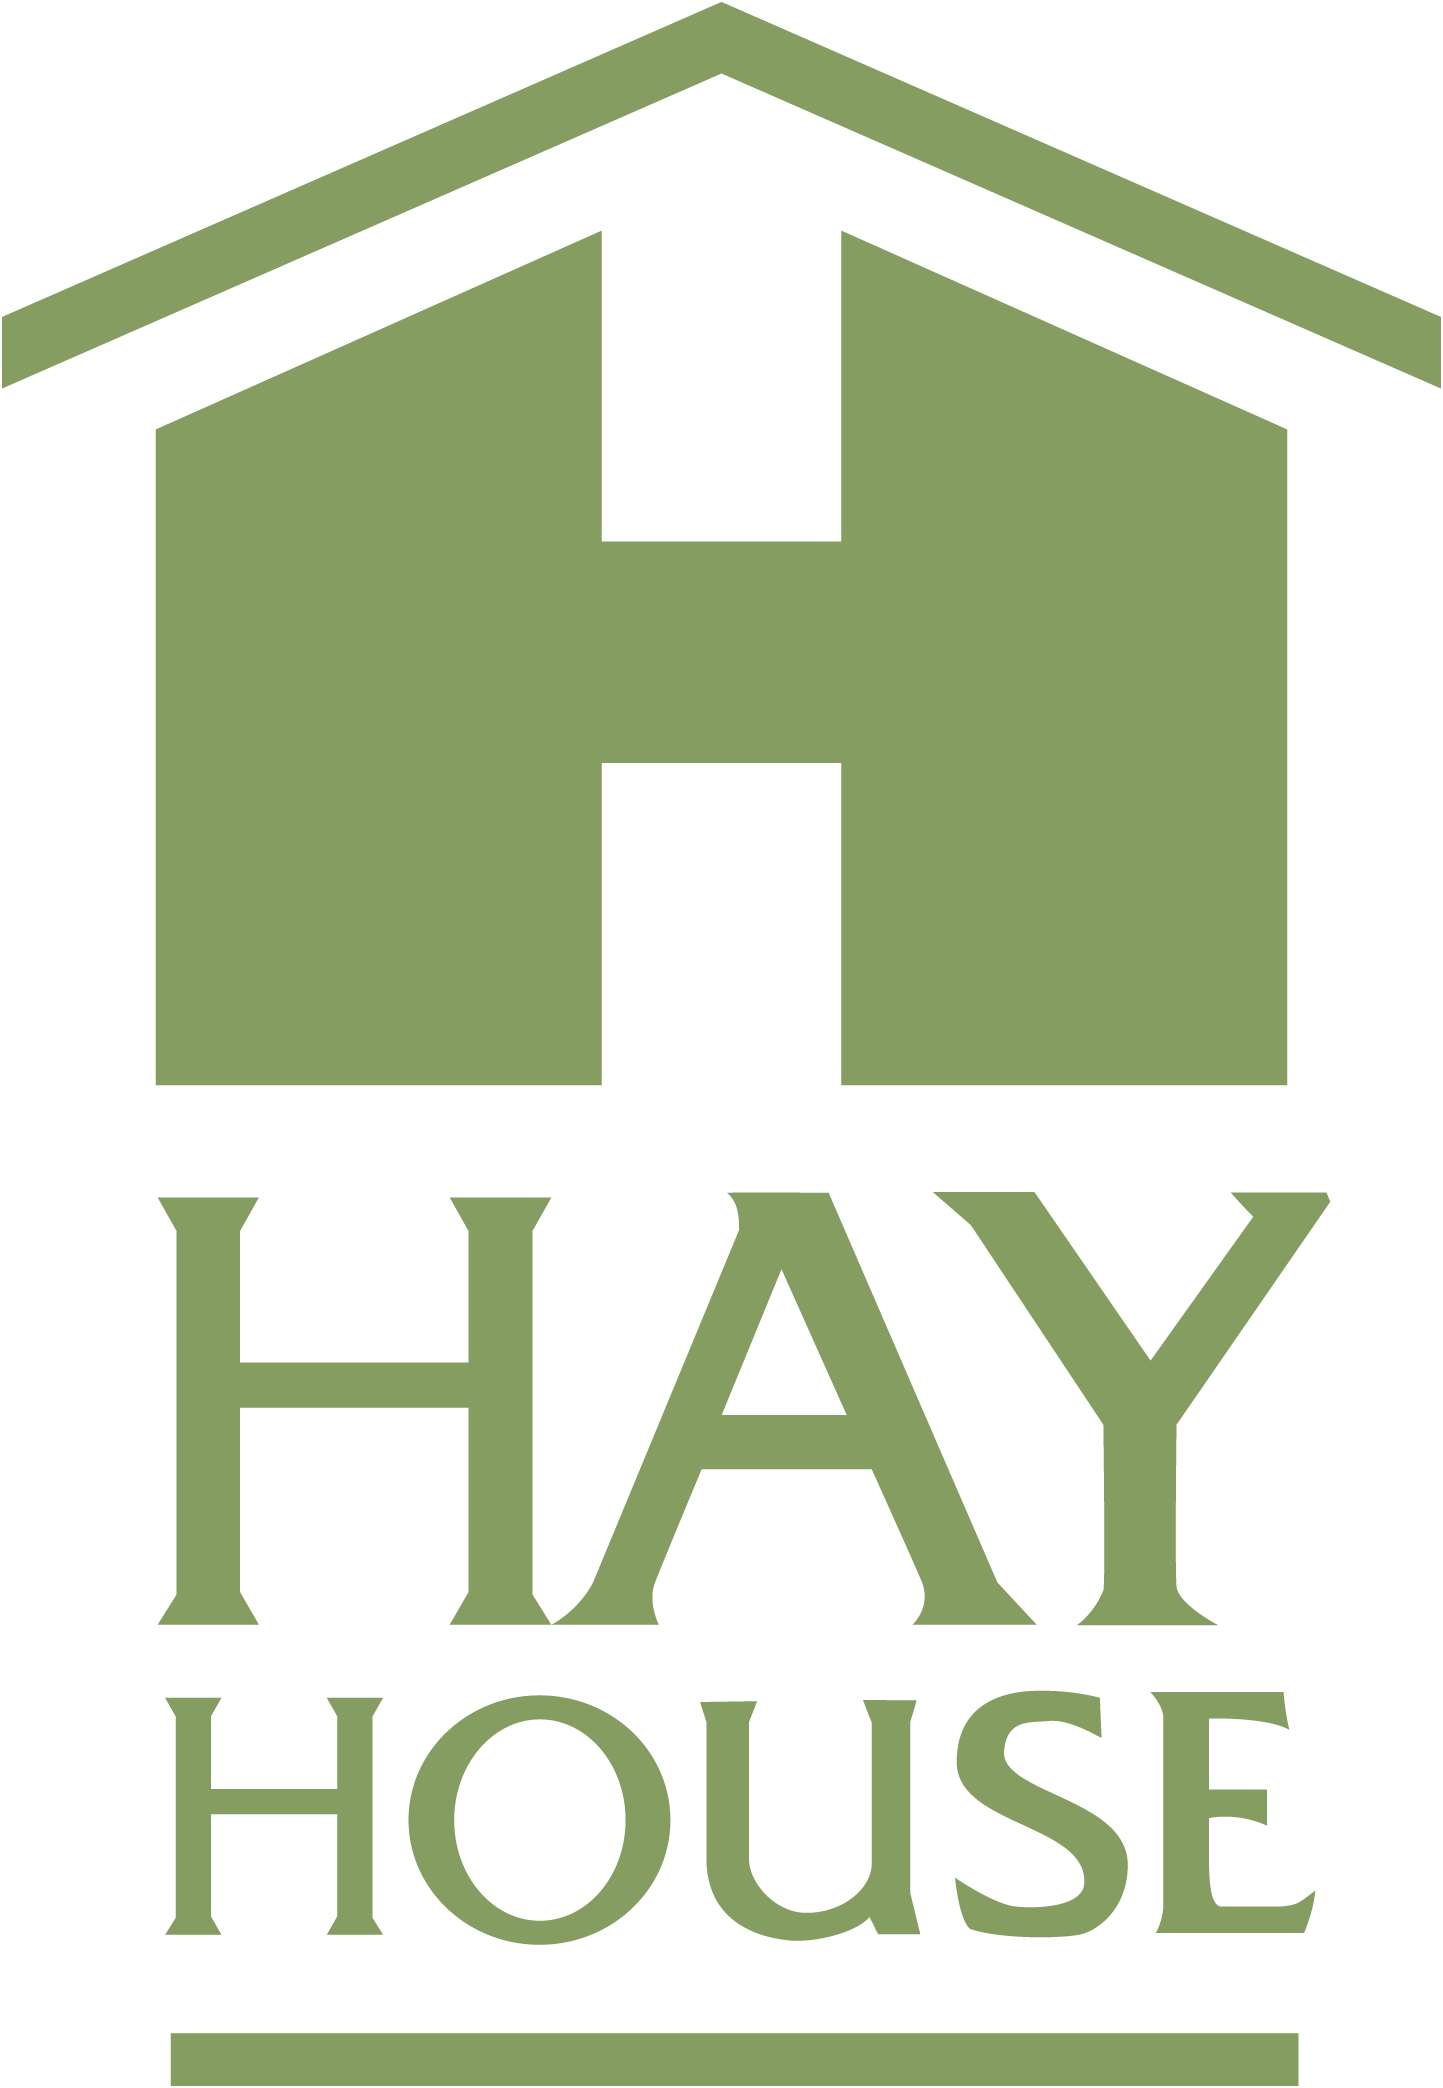 hay-house-vector-logo